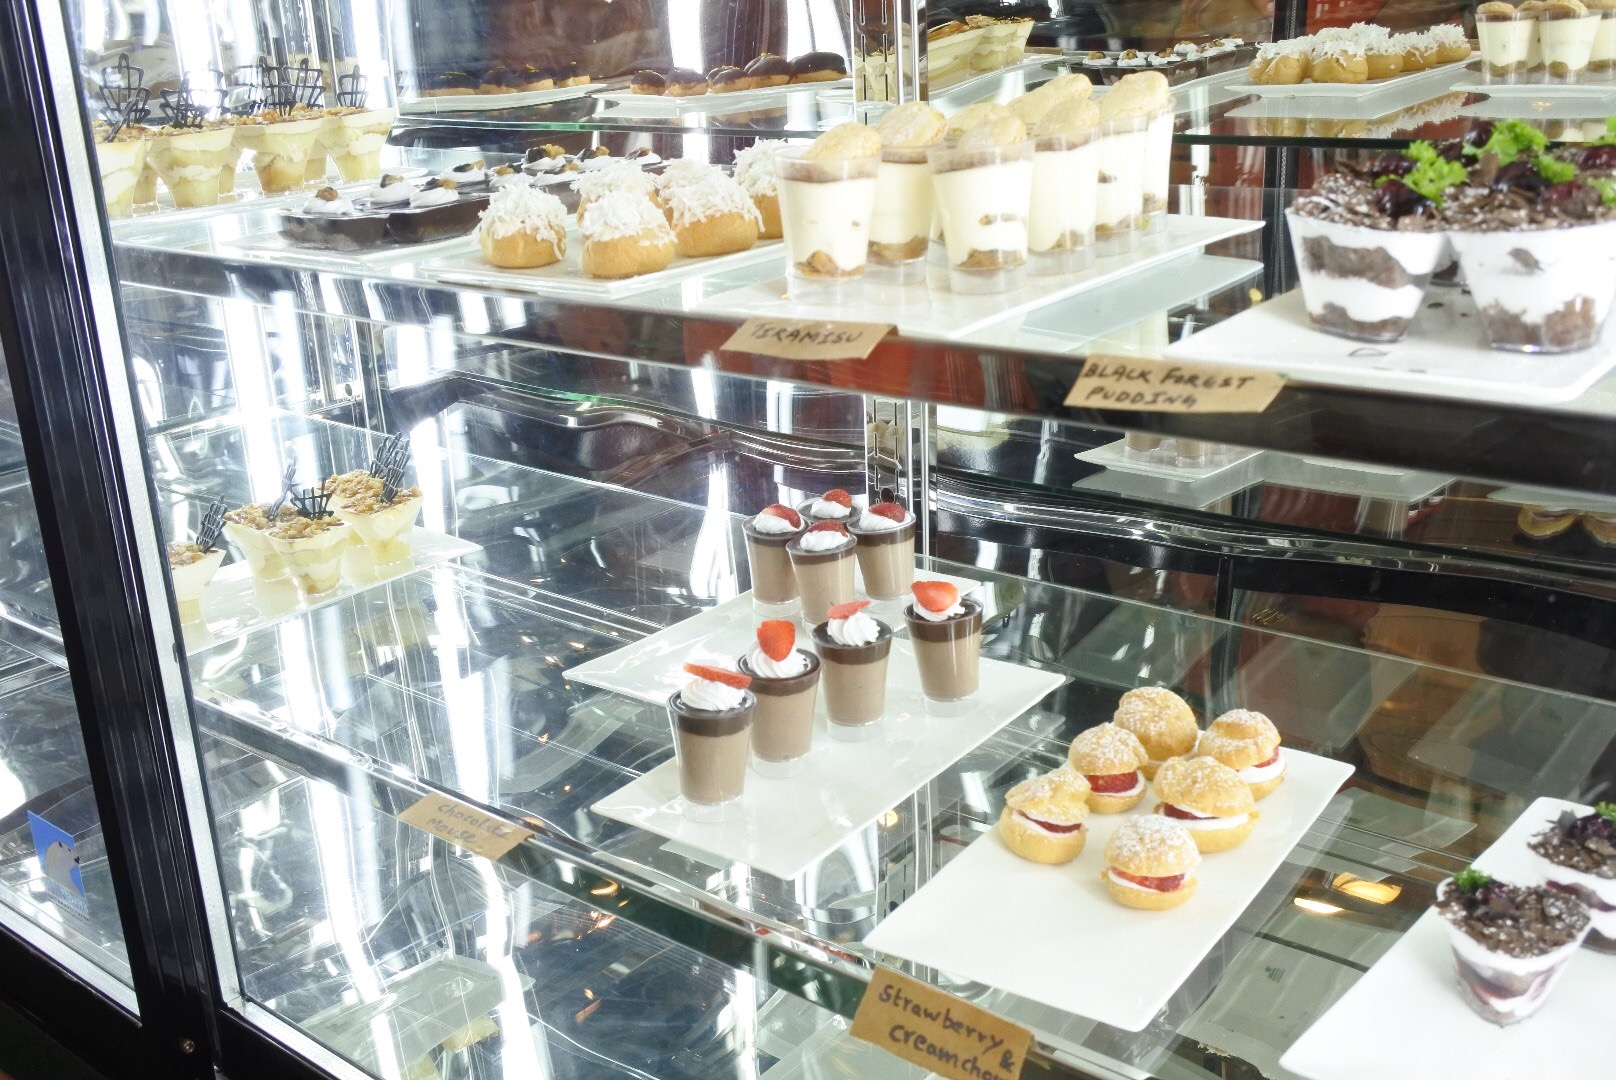 Variety of desserts on display